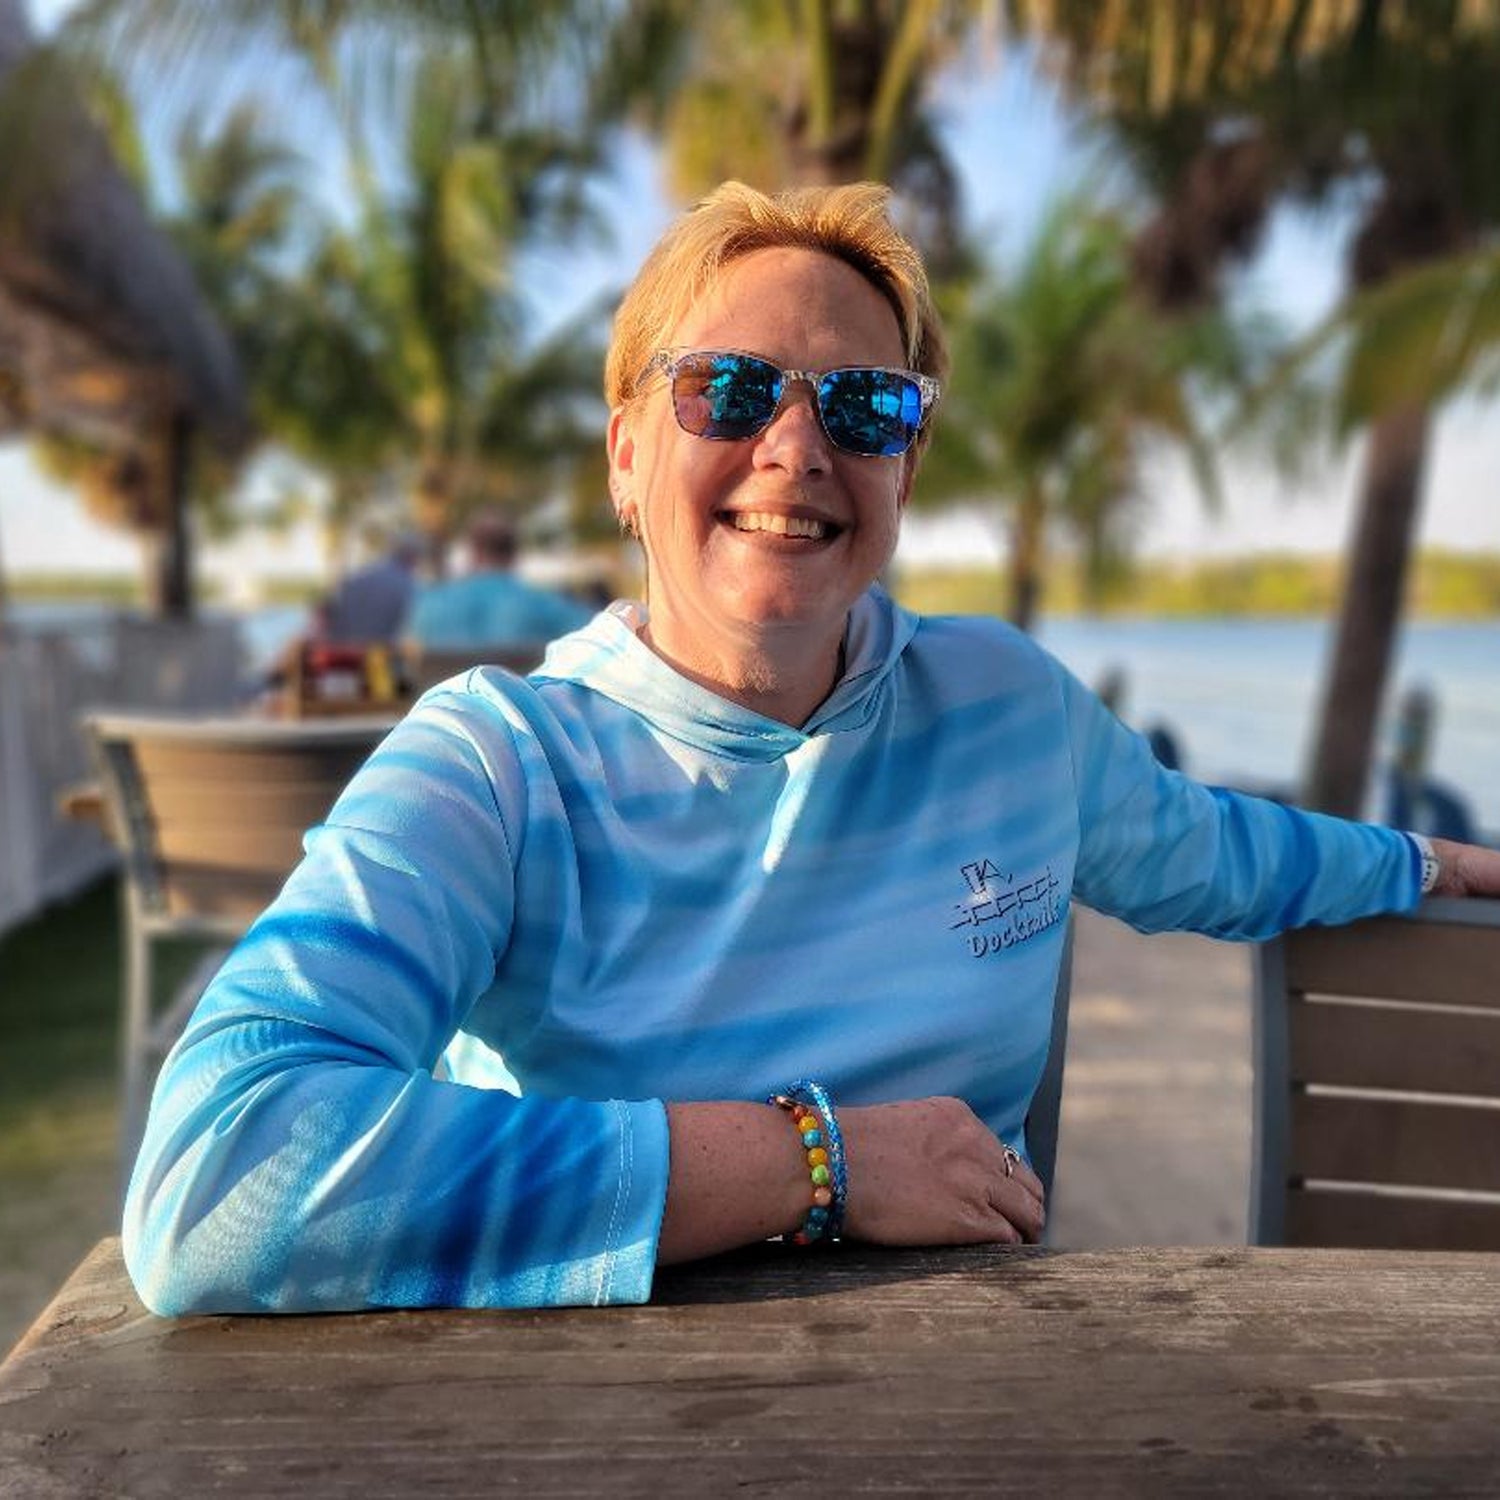 Docktails Ocean Vibes Sun Shirt Hoodie at Beach Bar in Jupiter Florida